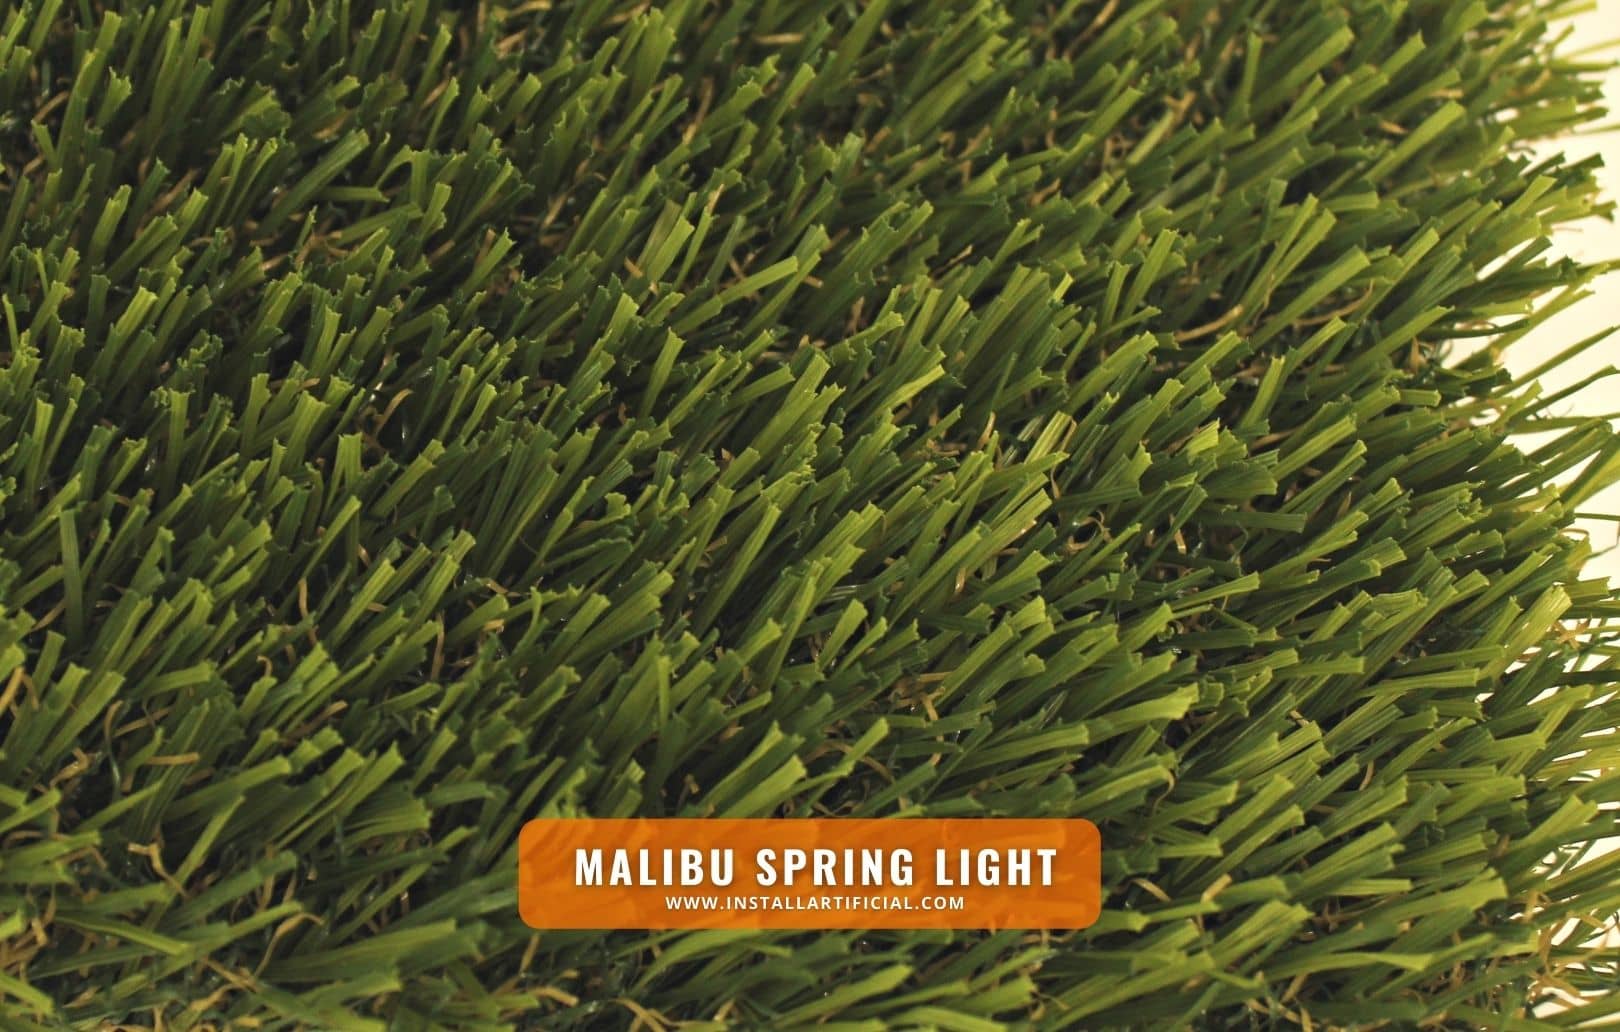 Malibu Spring Light, Tiger Turf, Synthetic Grass Warehouse, top